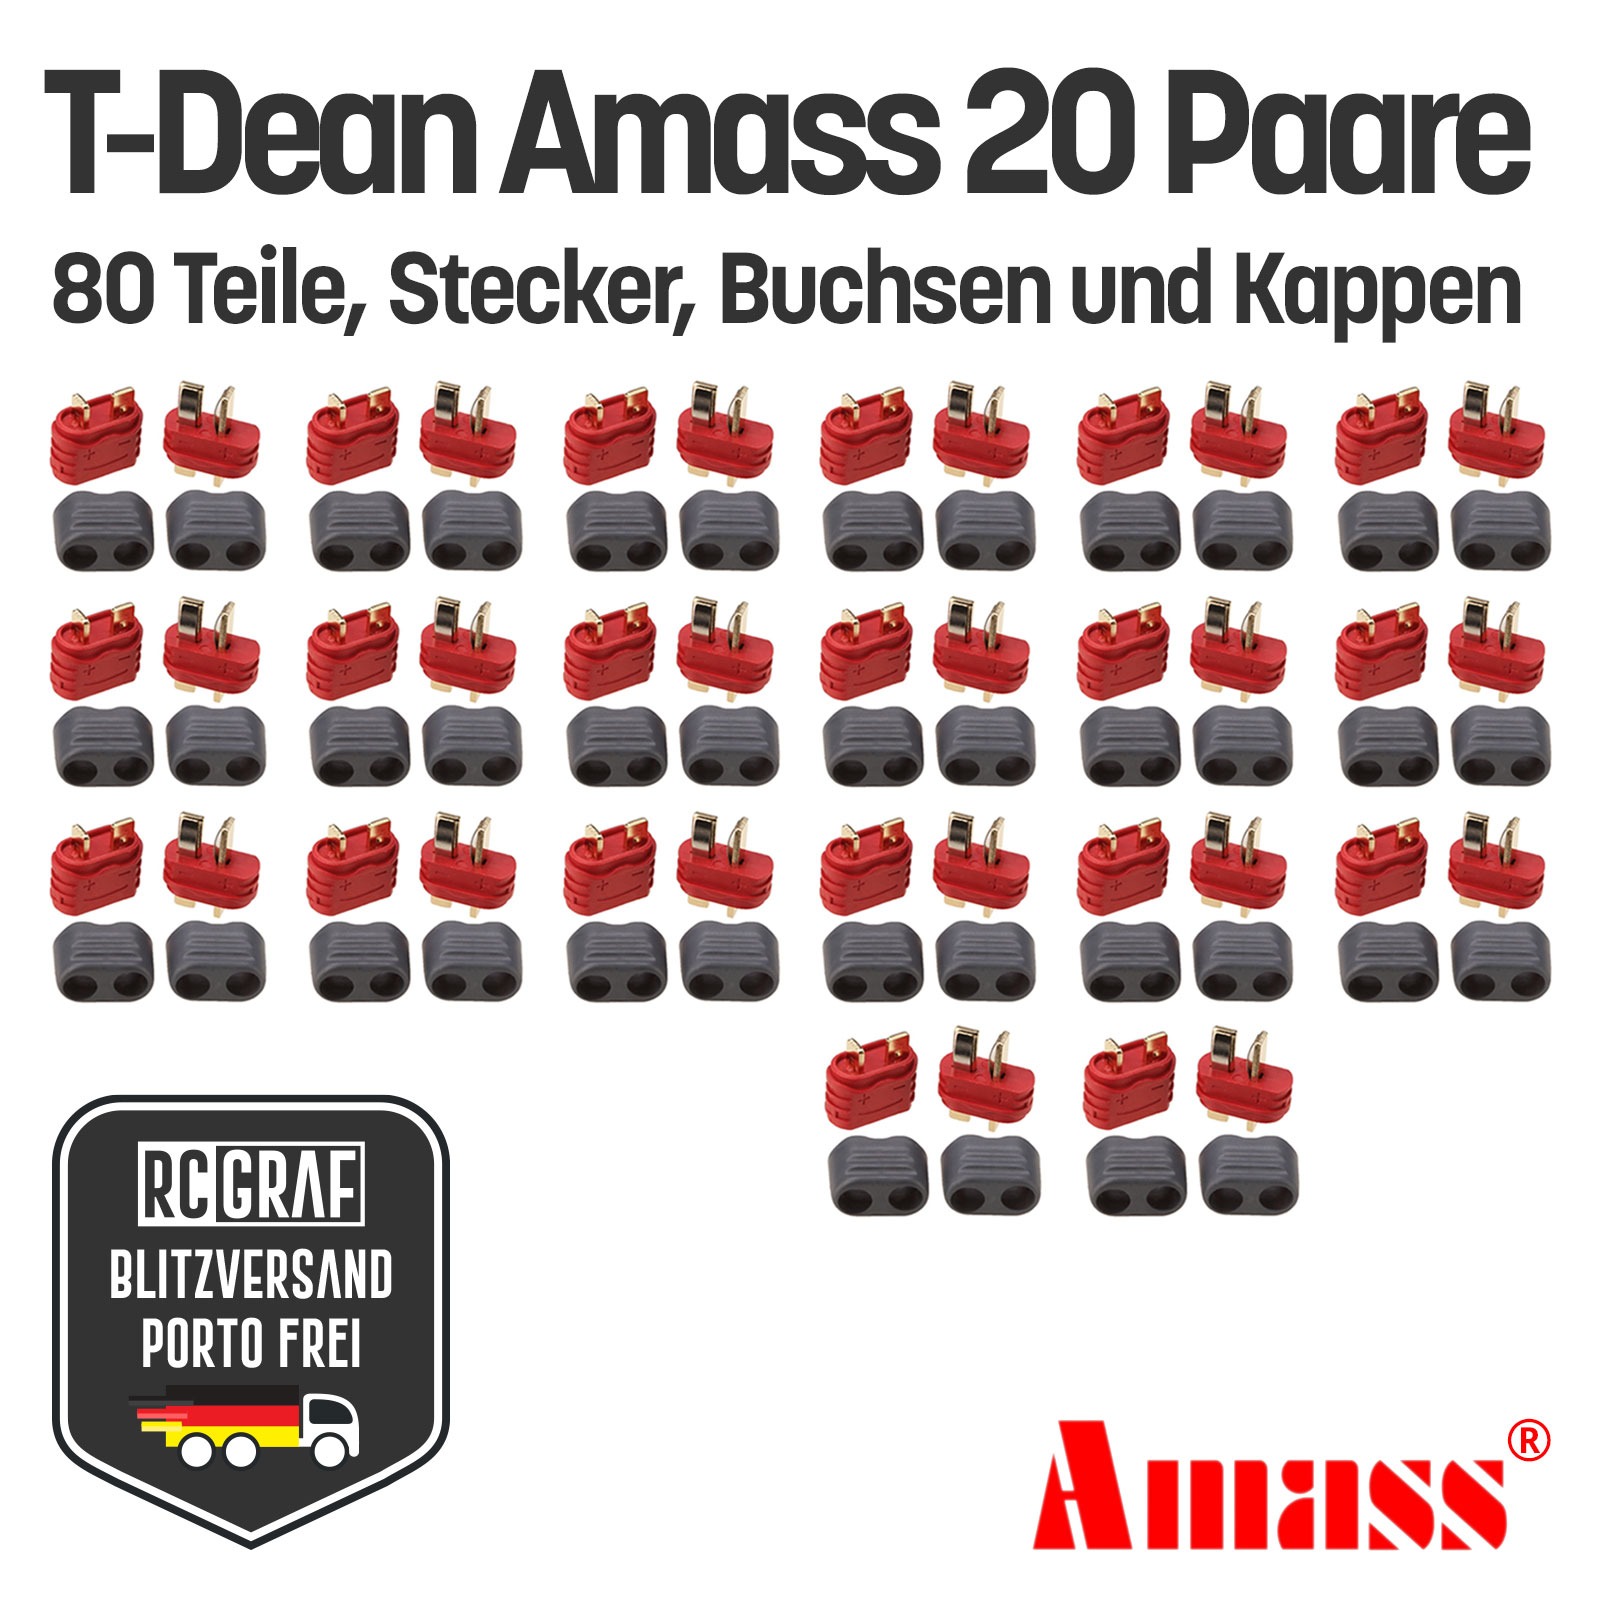 20 Paare T-Dean T-Plug Original Amass Stecker Buchse